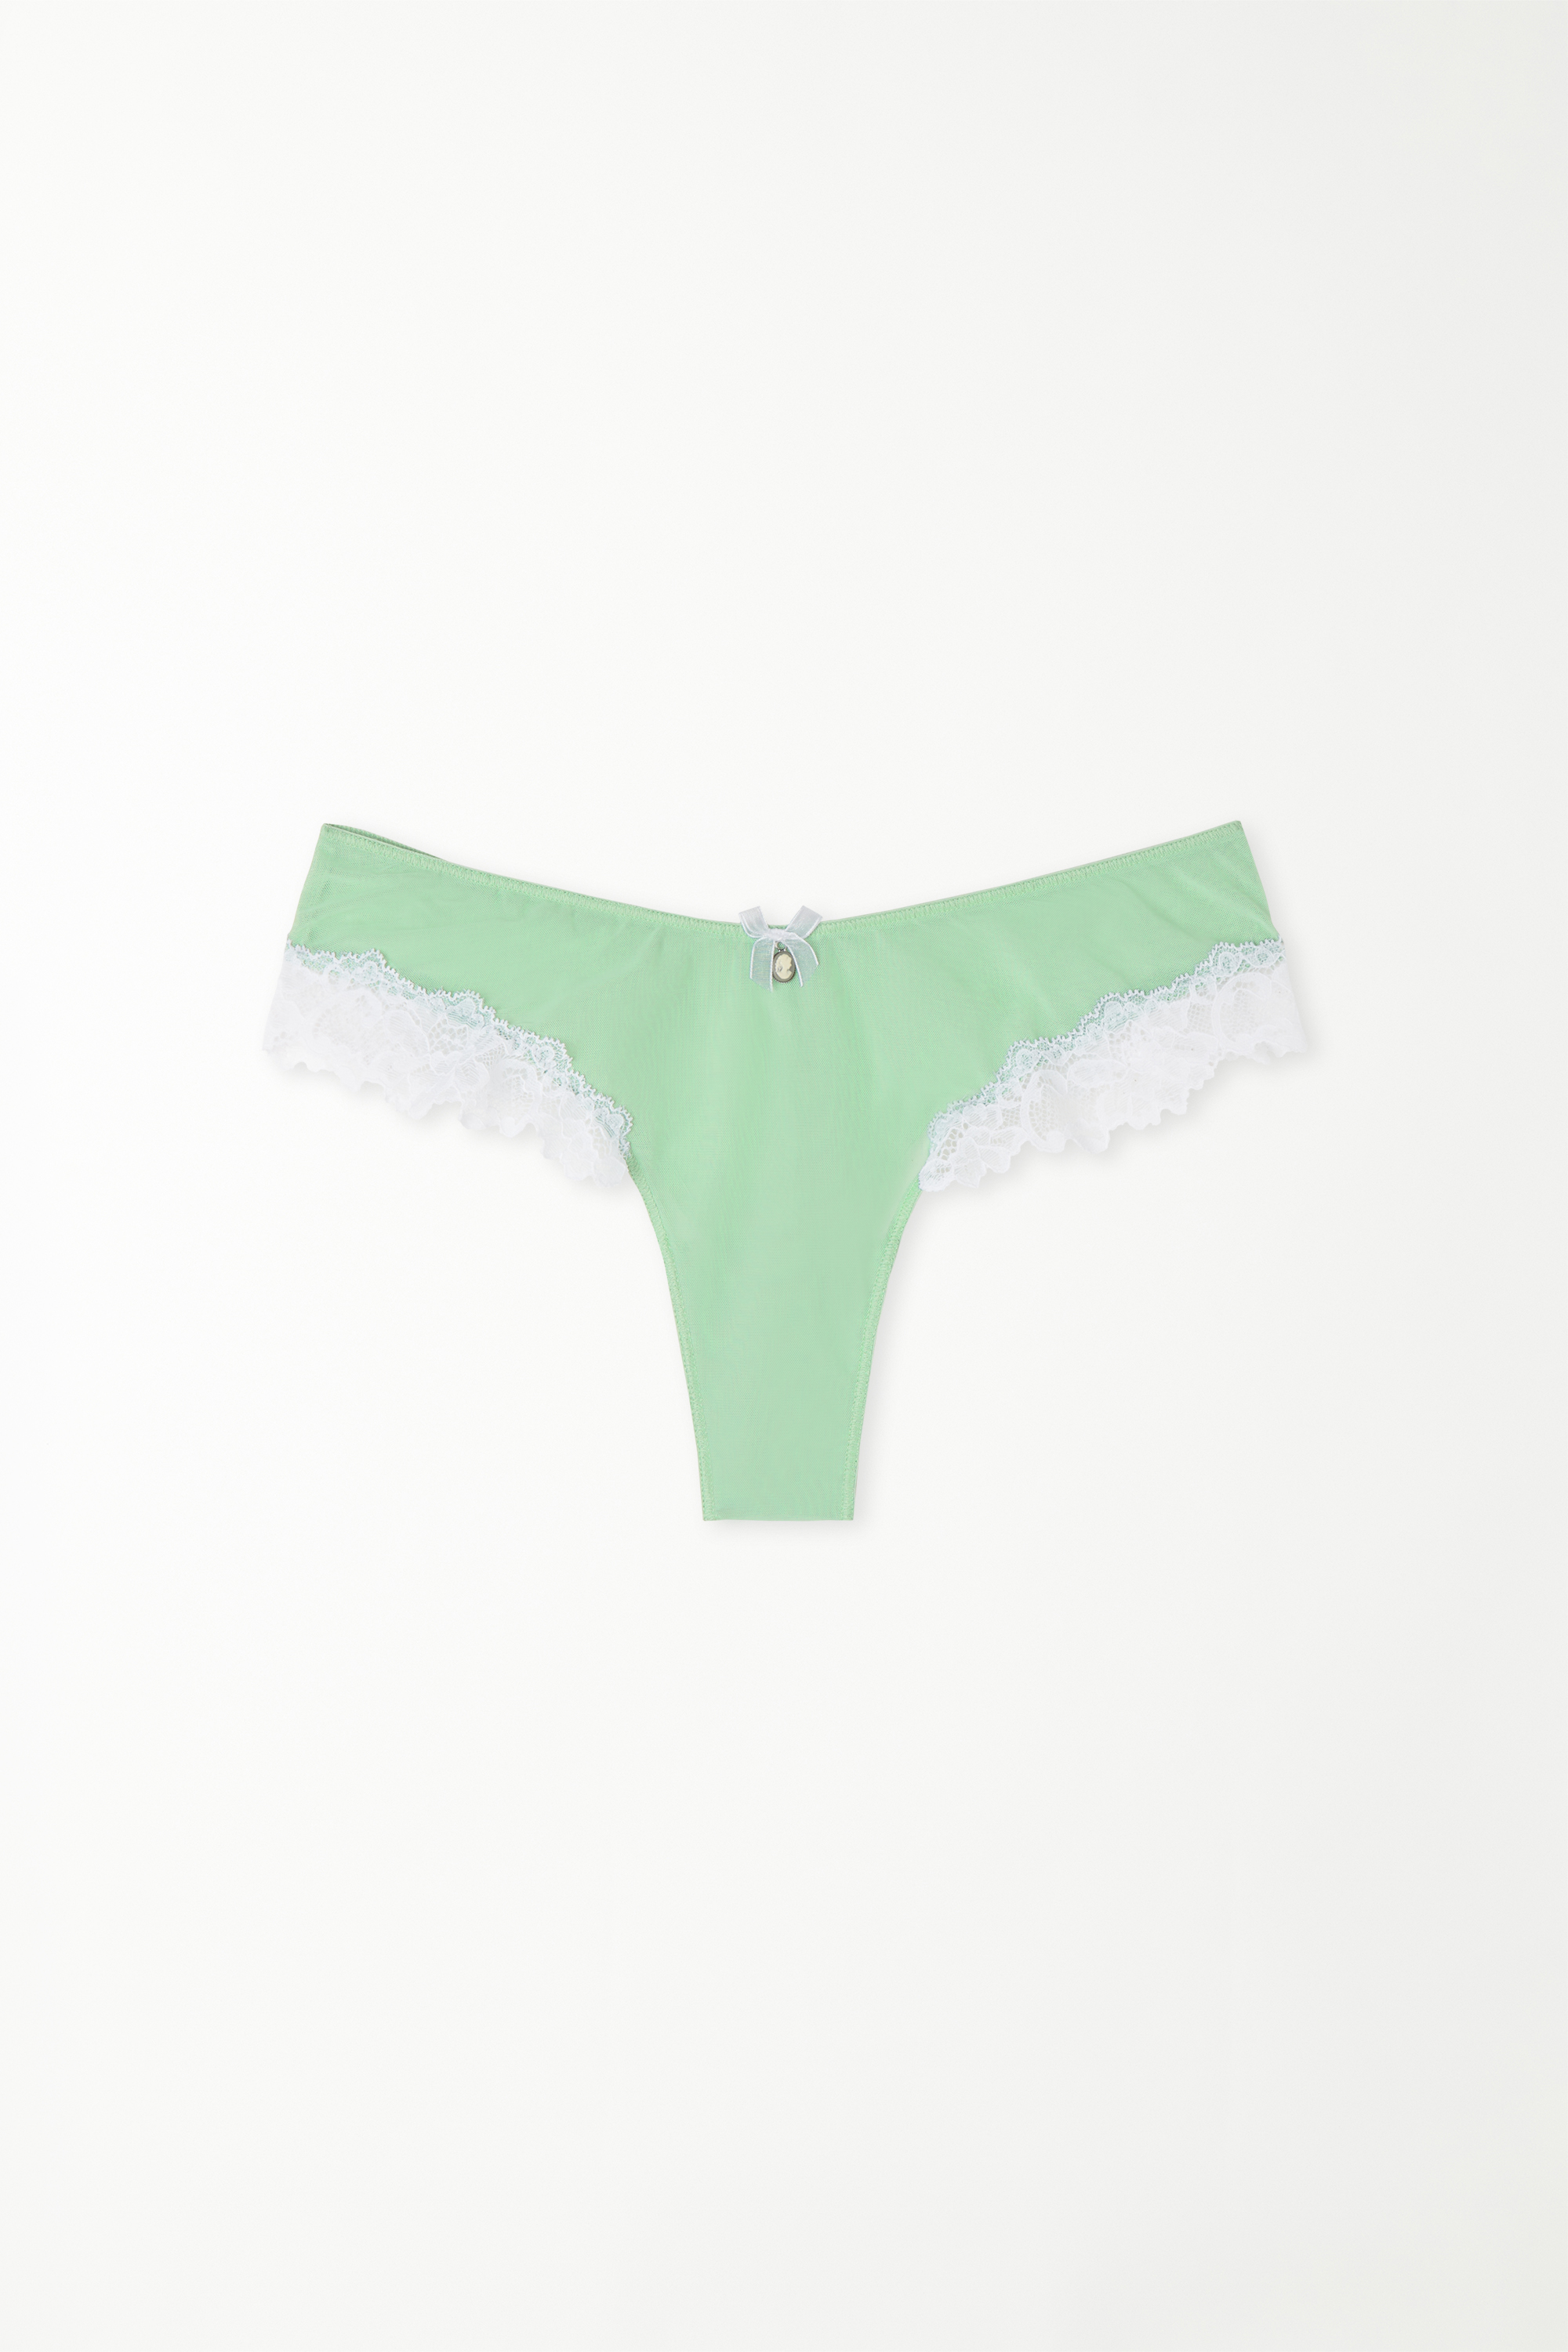 Soft Mint Cammeo Brazilian Panties